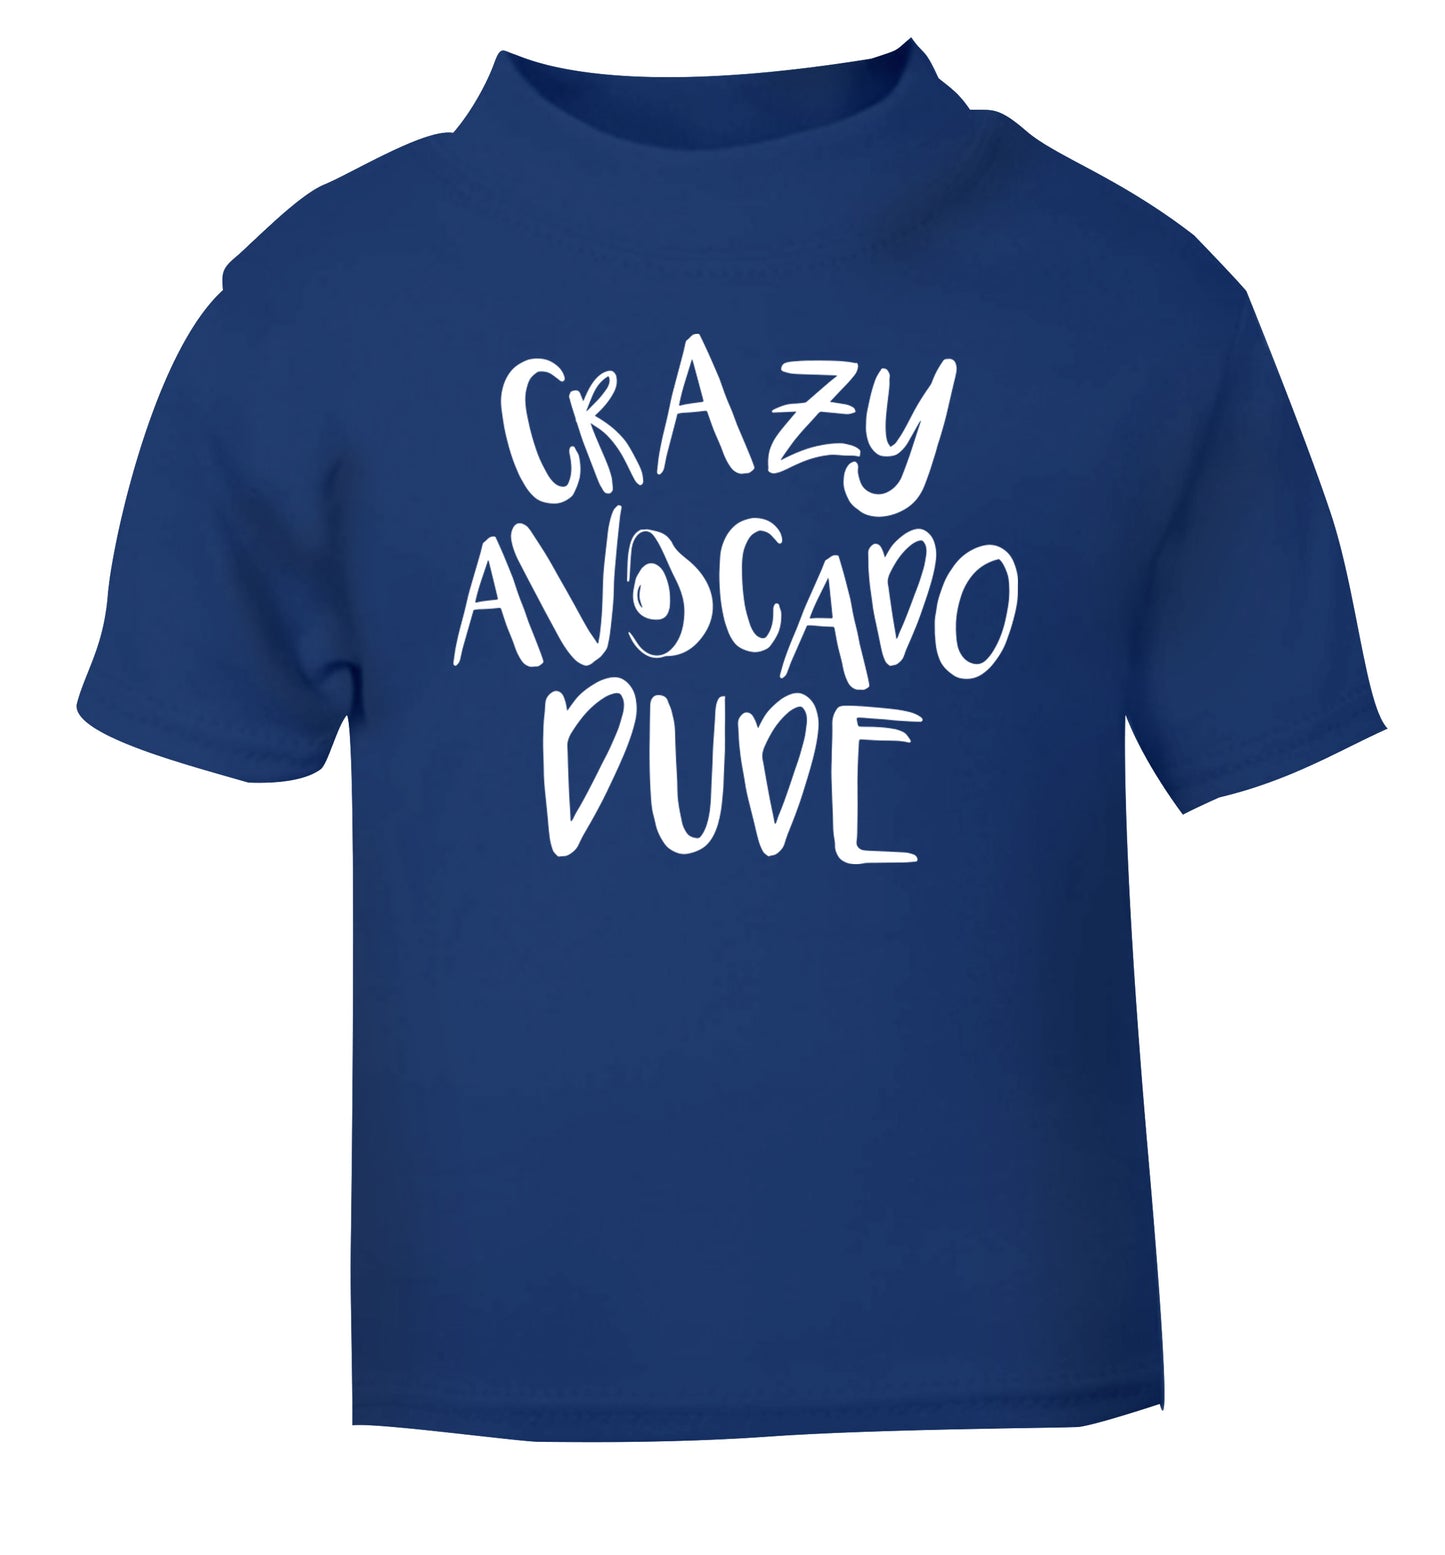 Crazy avocado dude blue Baby Toddler Tshirt 2 Years